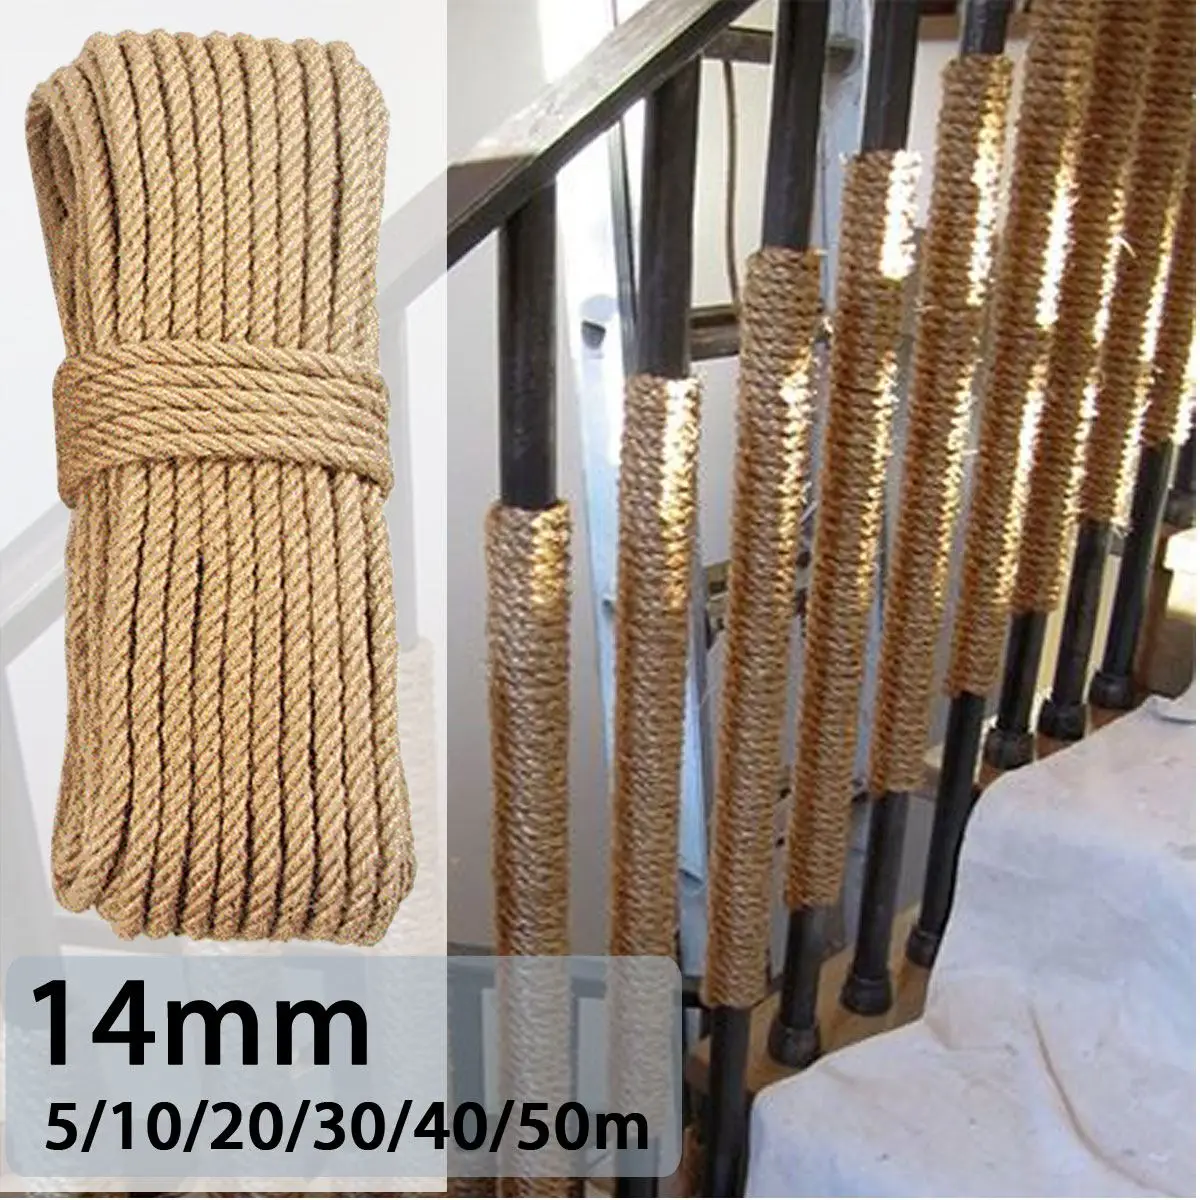 

KIWARM 14mm 5m-50m Natural Jute Rope Twine Rope Hemp Twisted Cord Macrame String DIY Craft Handmade Decoration Pet Scratching